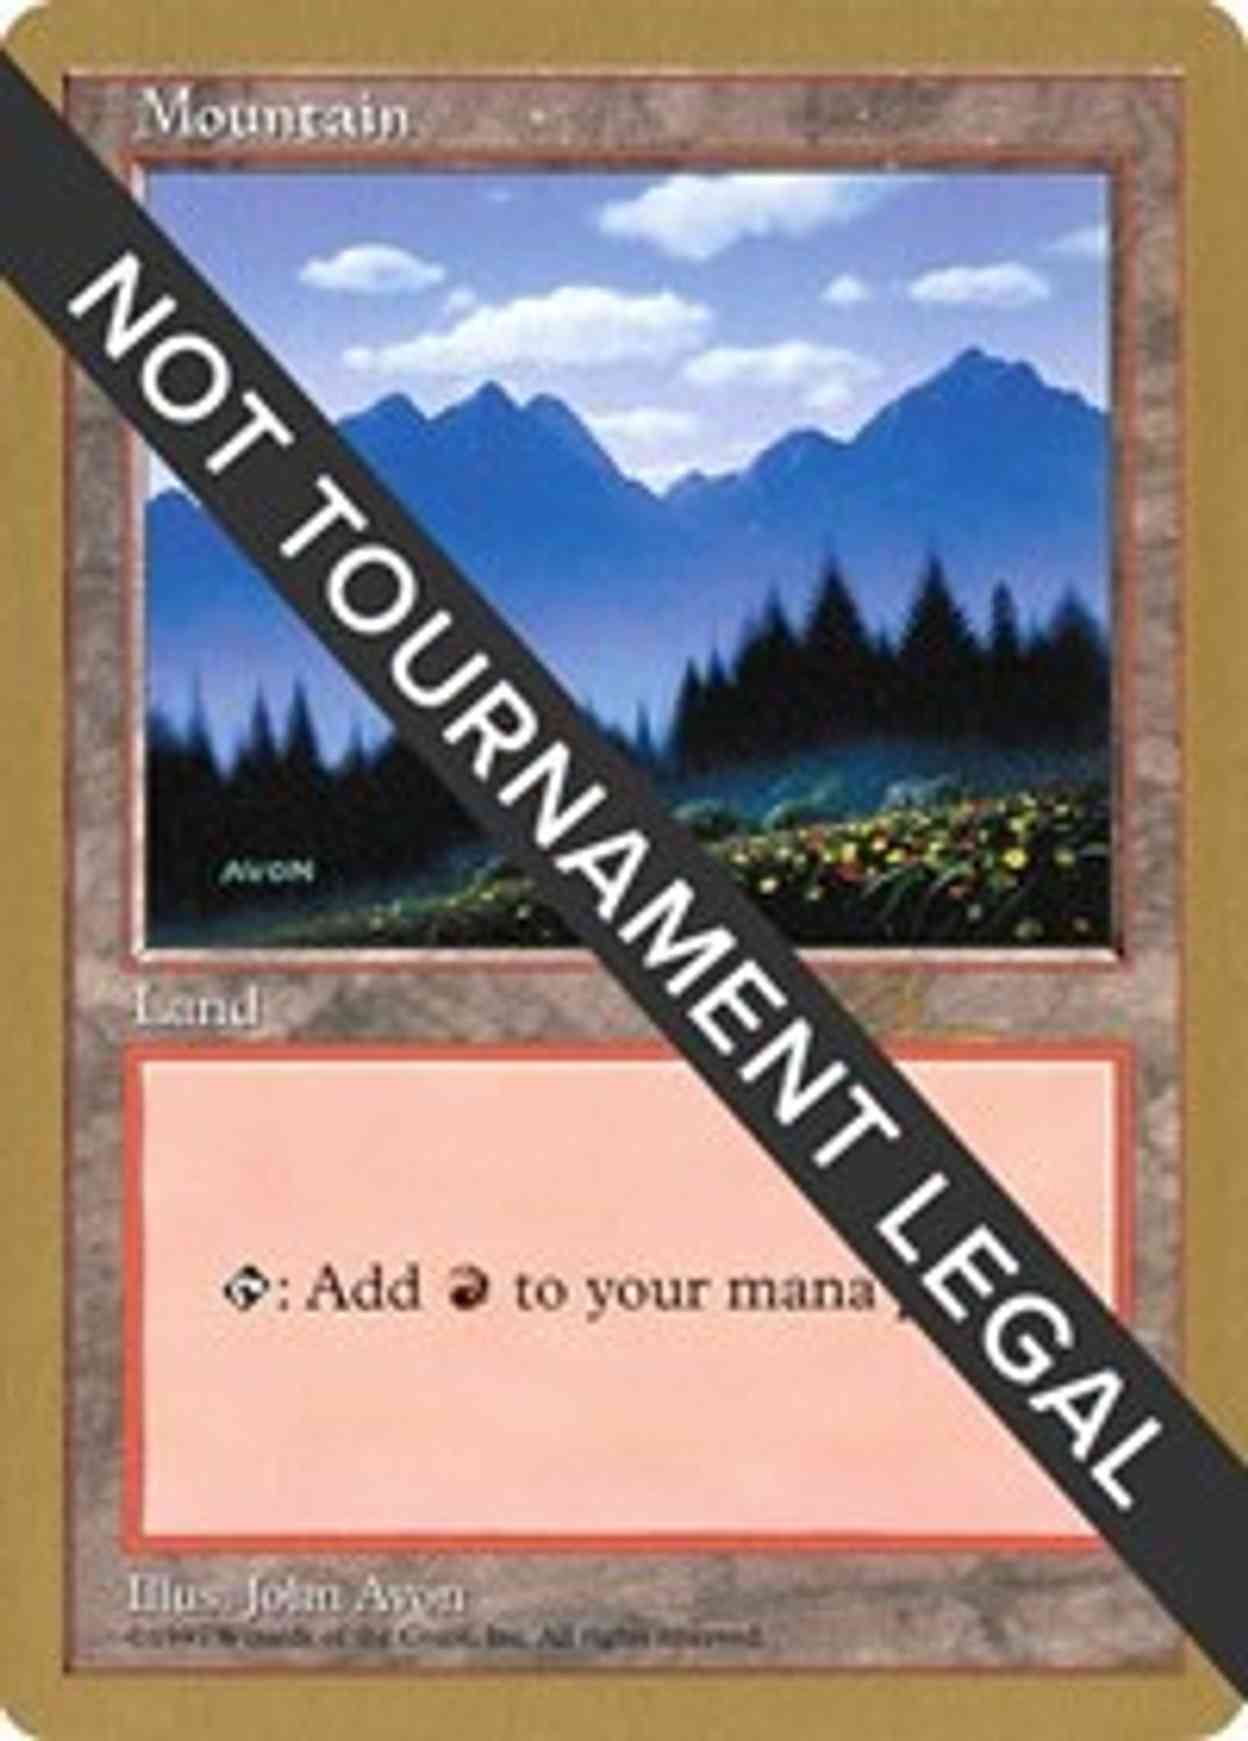 Mountain (433) - 1997 Paul McCabe (5ED) magic card front